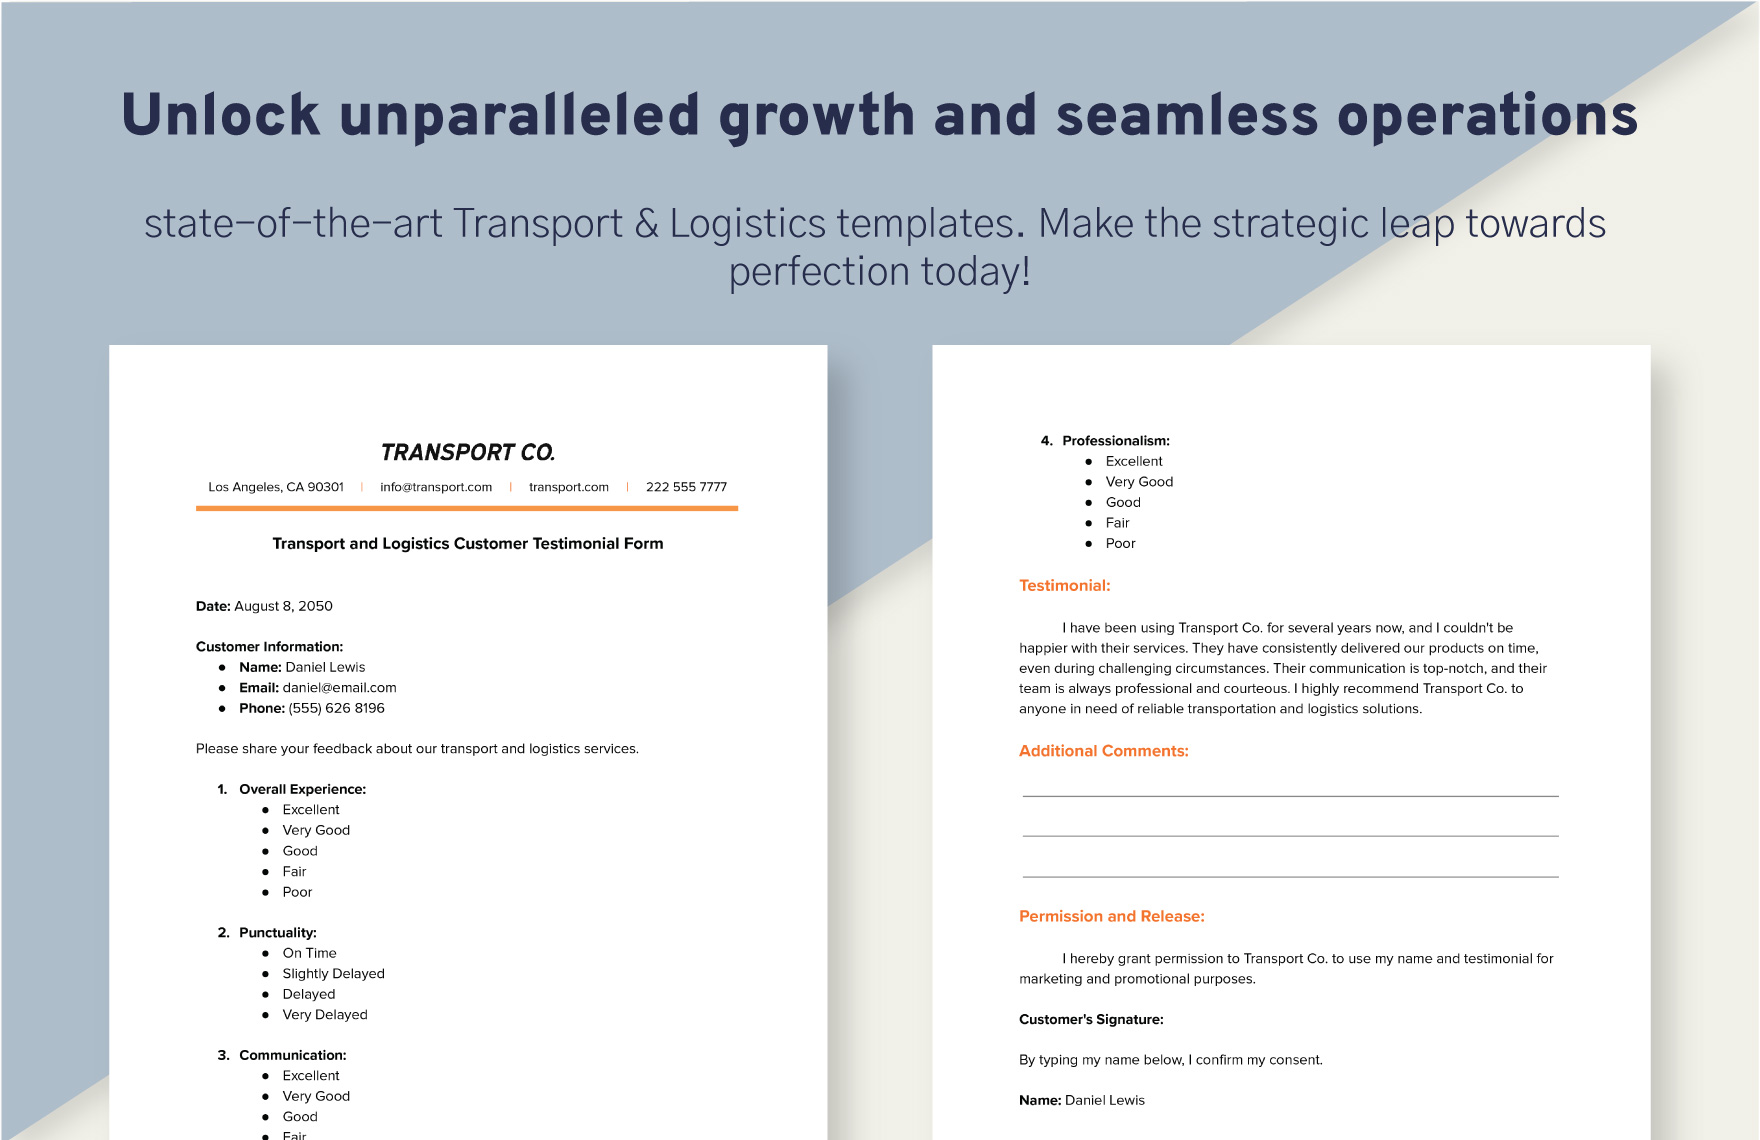 Transport and Logistics Customer Testimonial Form Template